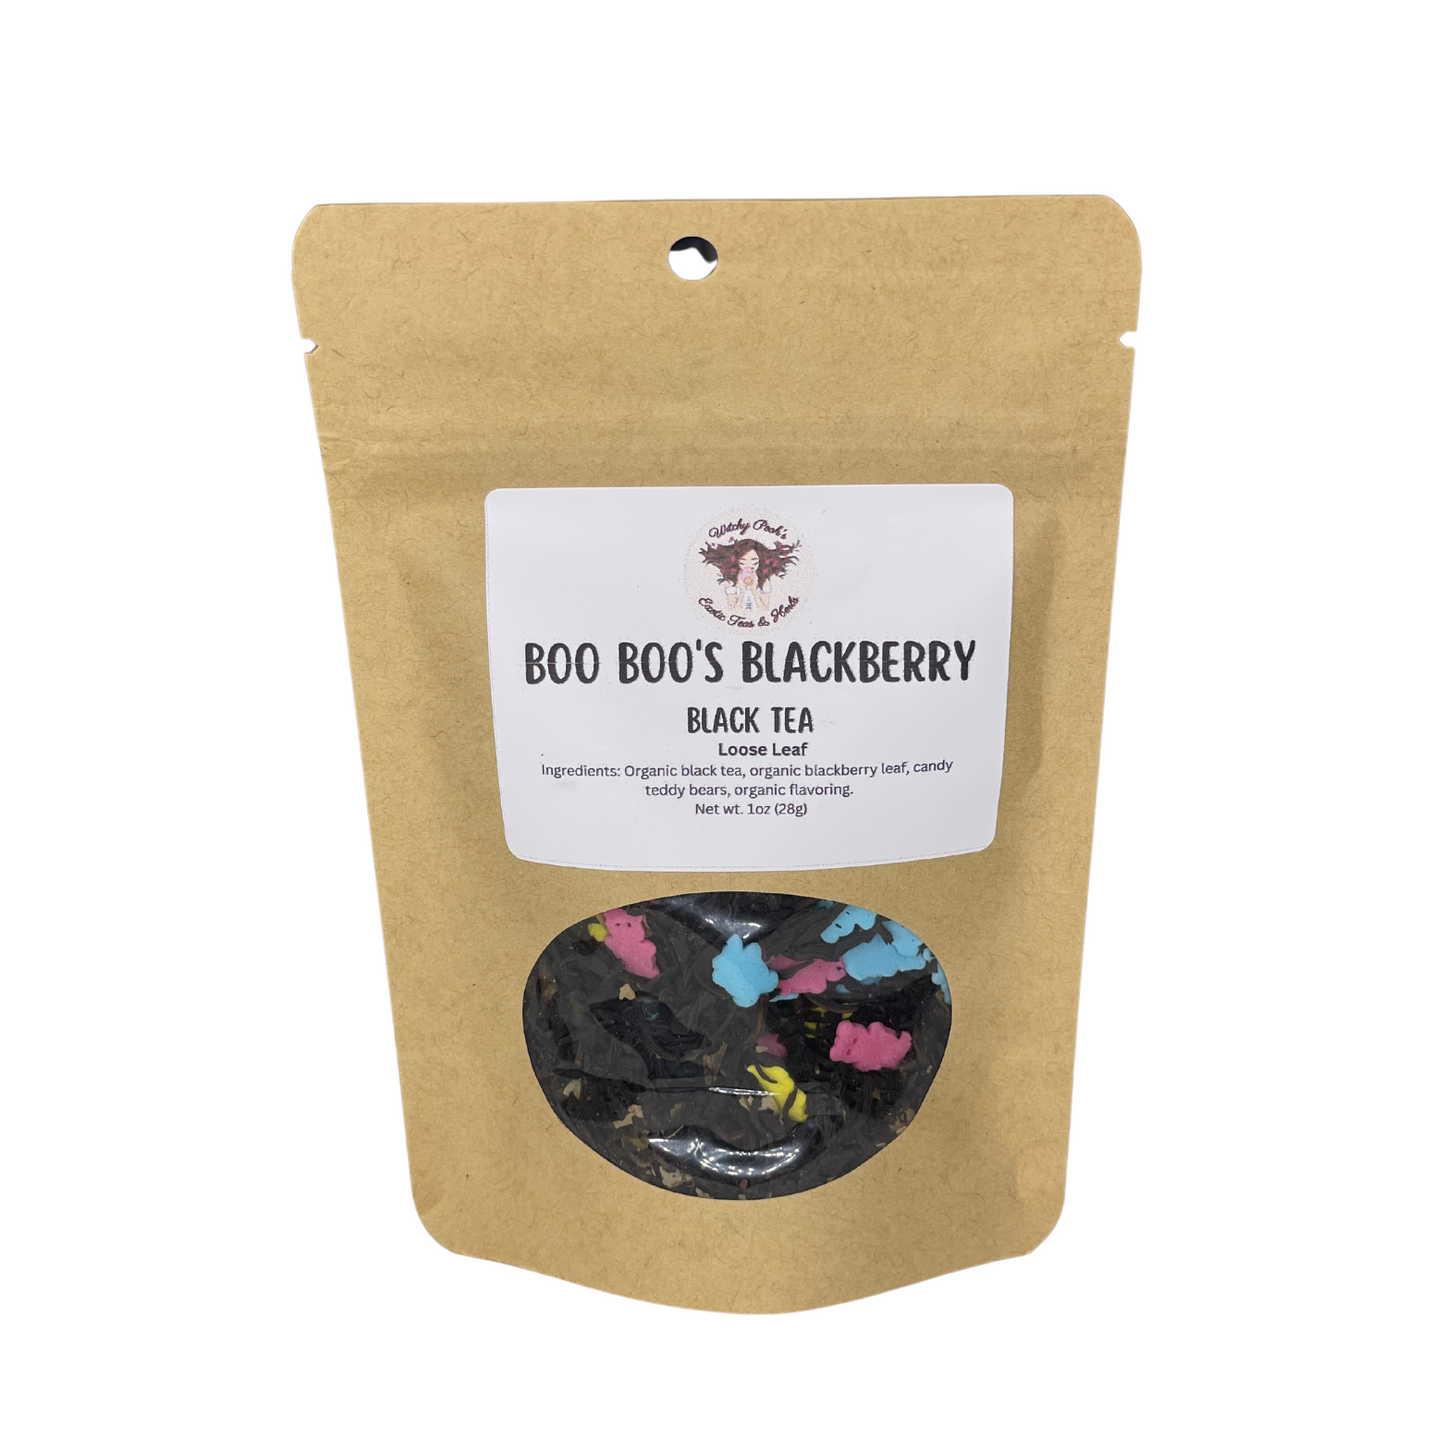 Boo Boo's Blackberry Tea,  Black Tea, Loose Leaf Tea, Flavored Tea, Tea with Candy